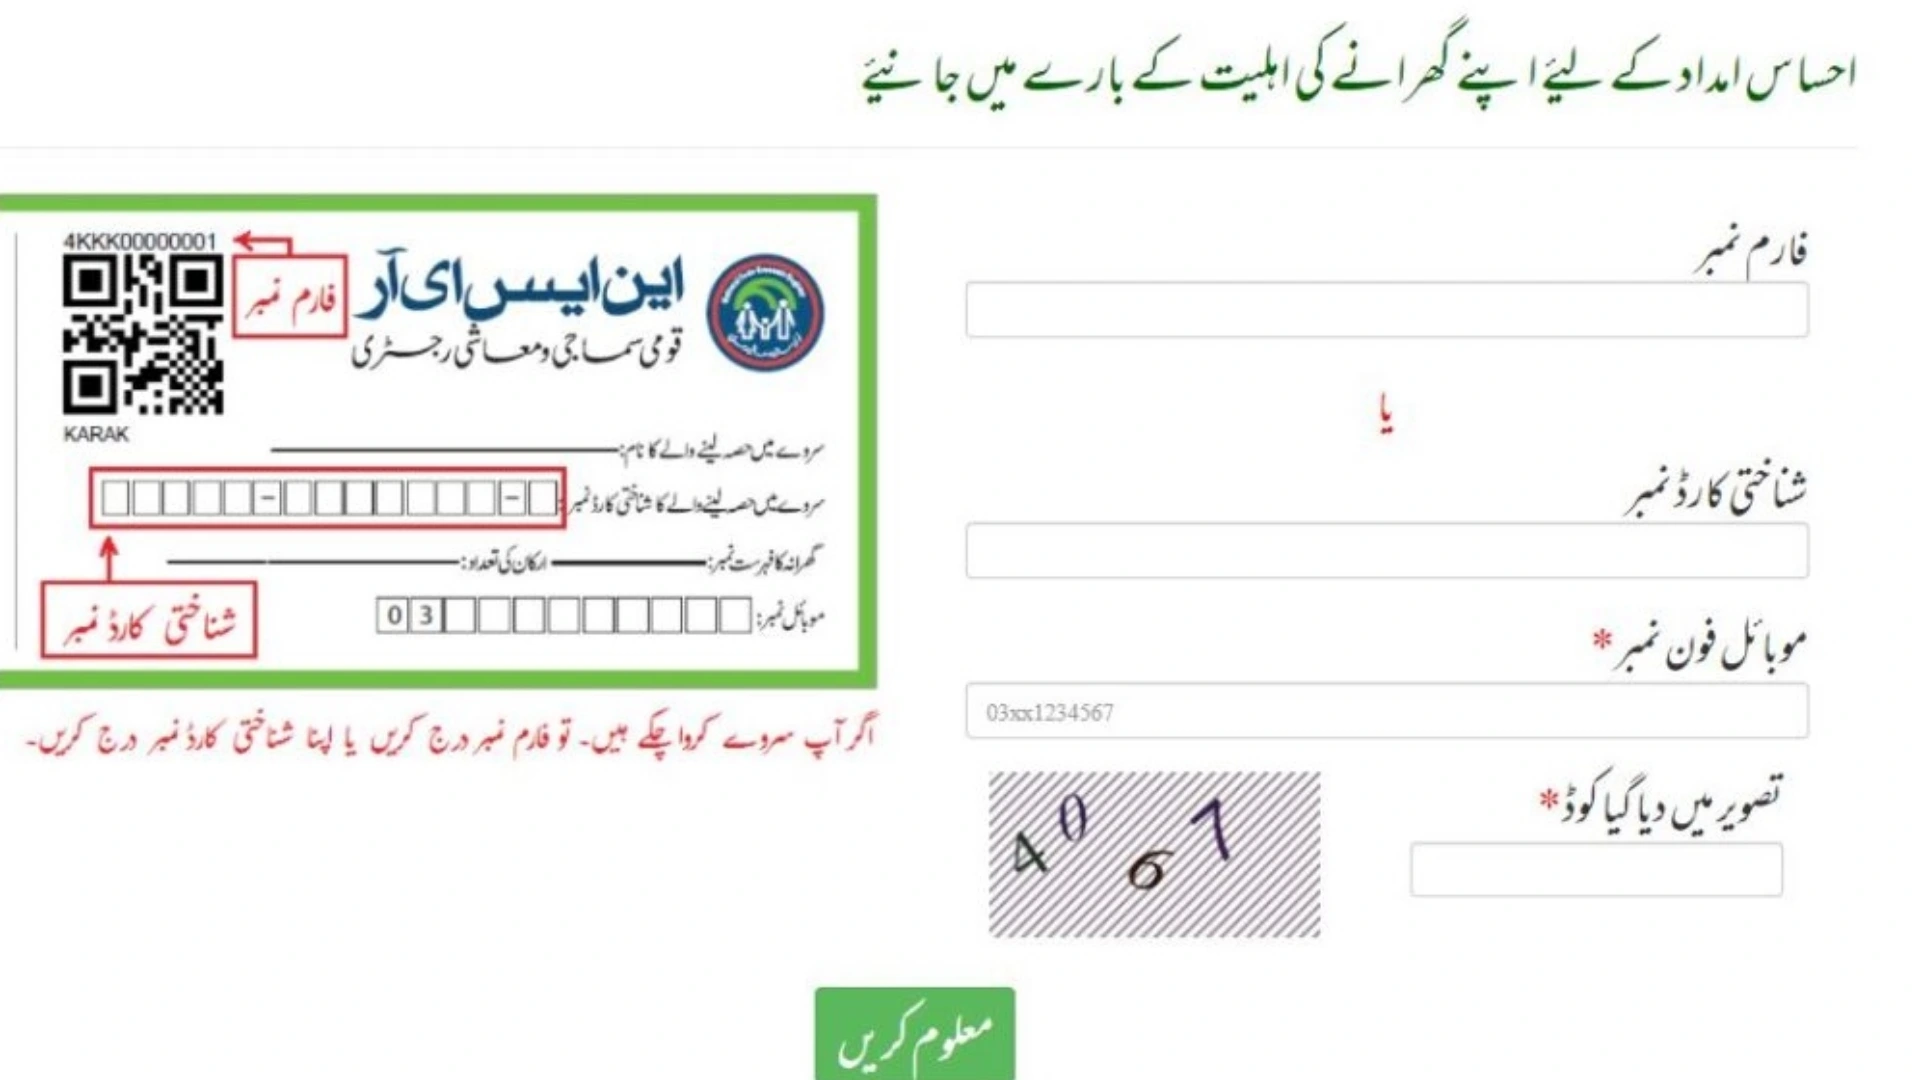 Online Registration process for Dar-ul-Pass Program